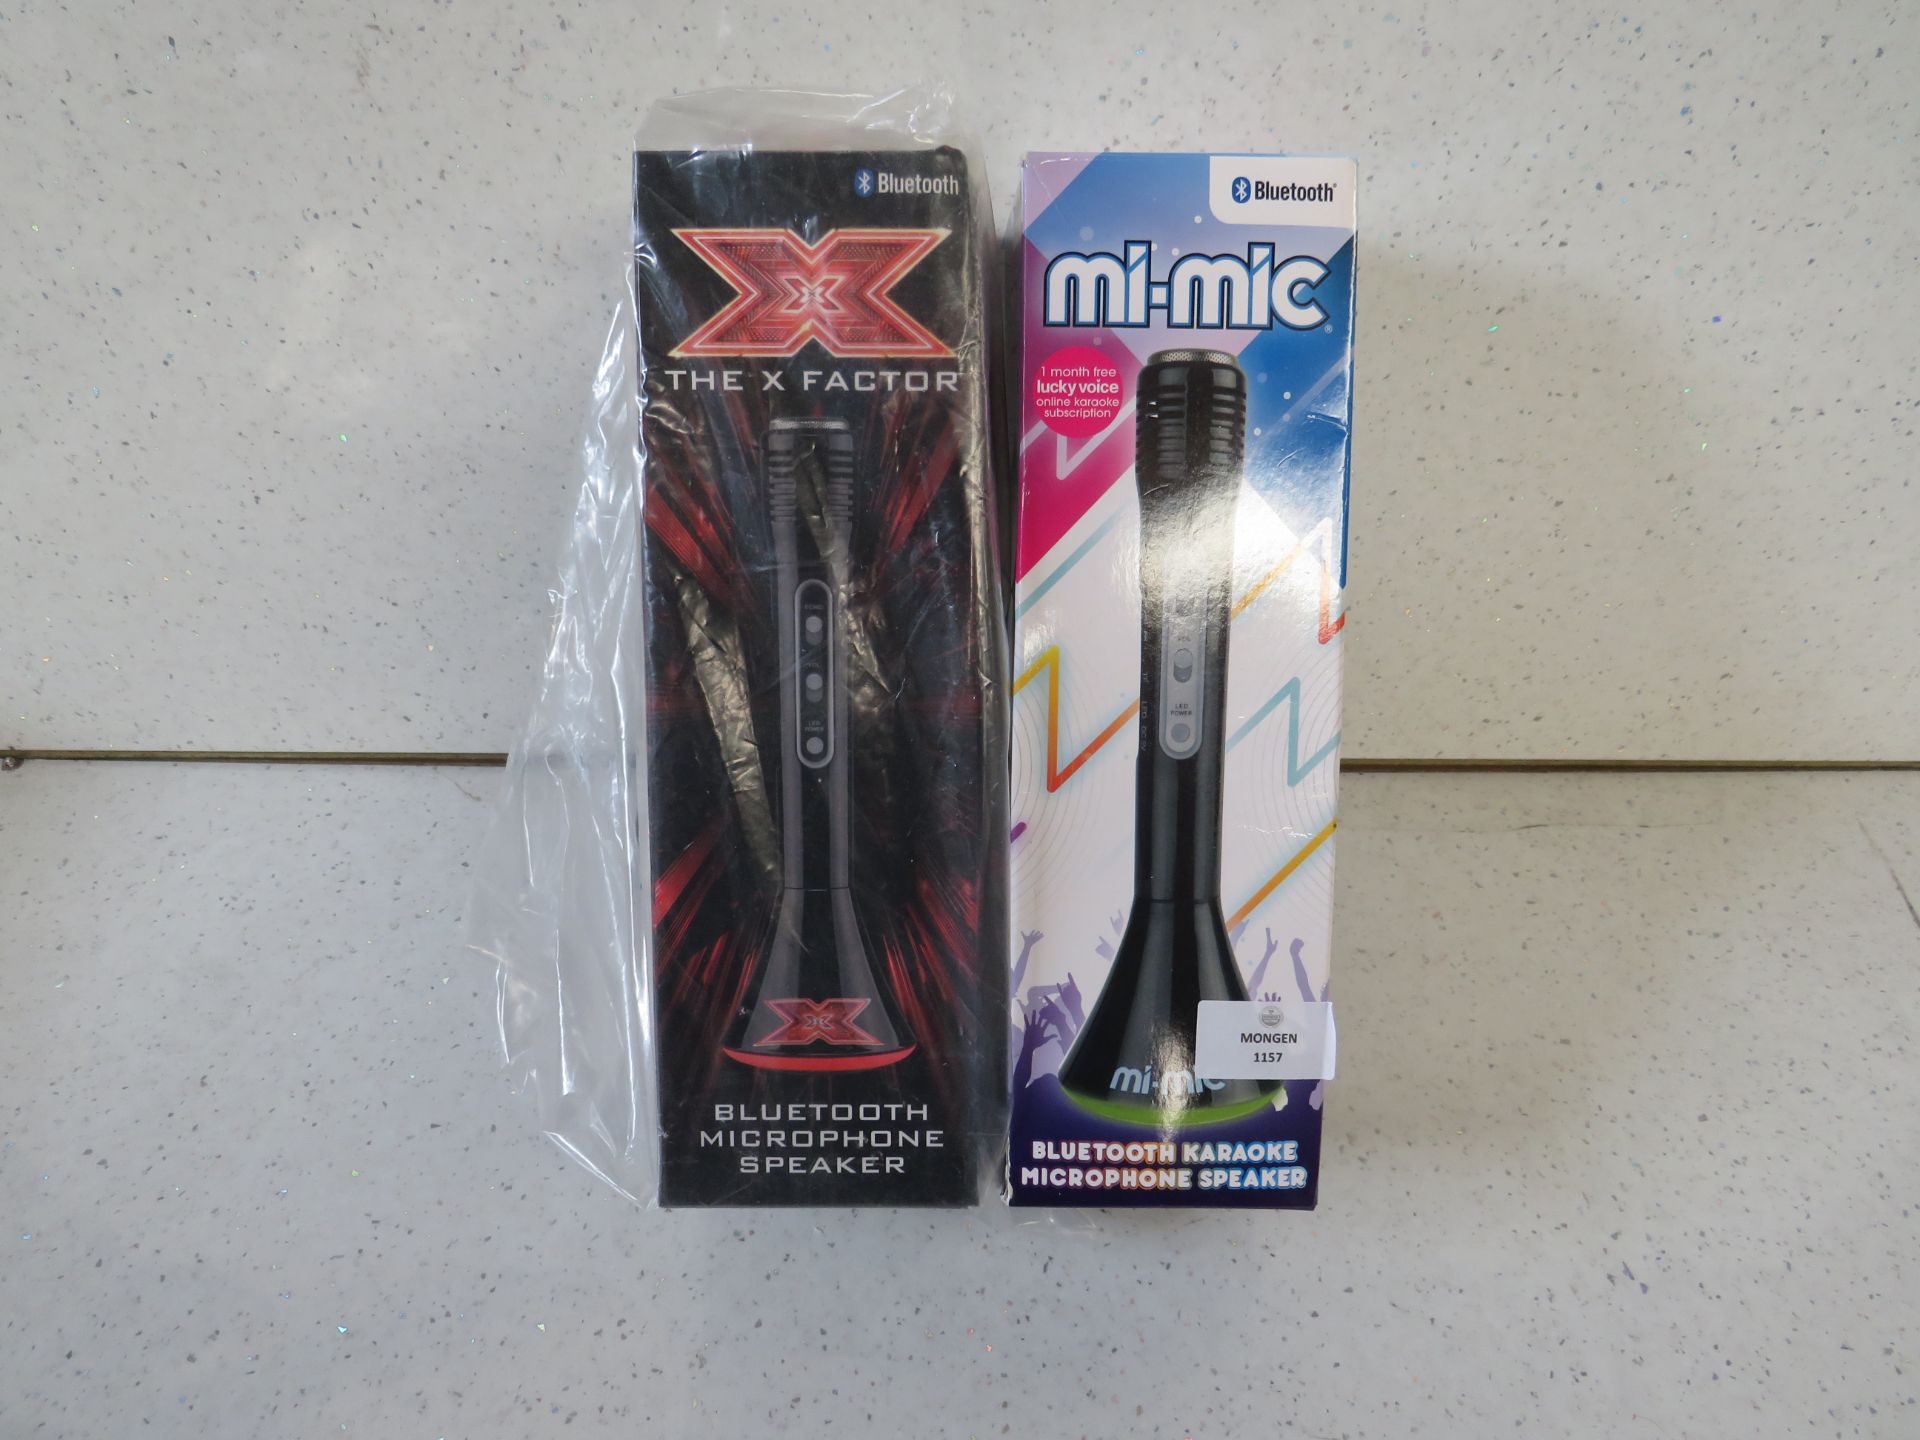 1x Mi-Mic - Bluetooth Karaoke Microphone - Unchecked & Boxed. 1x Xfactor - Bluetooth Karaoke